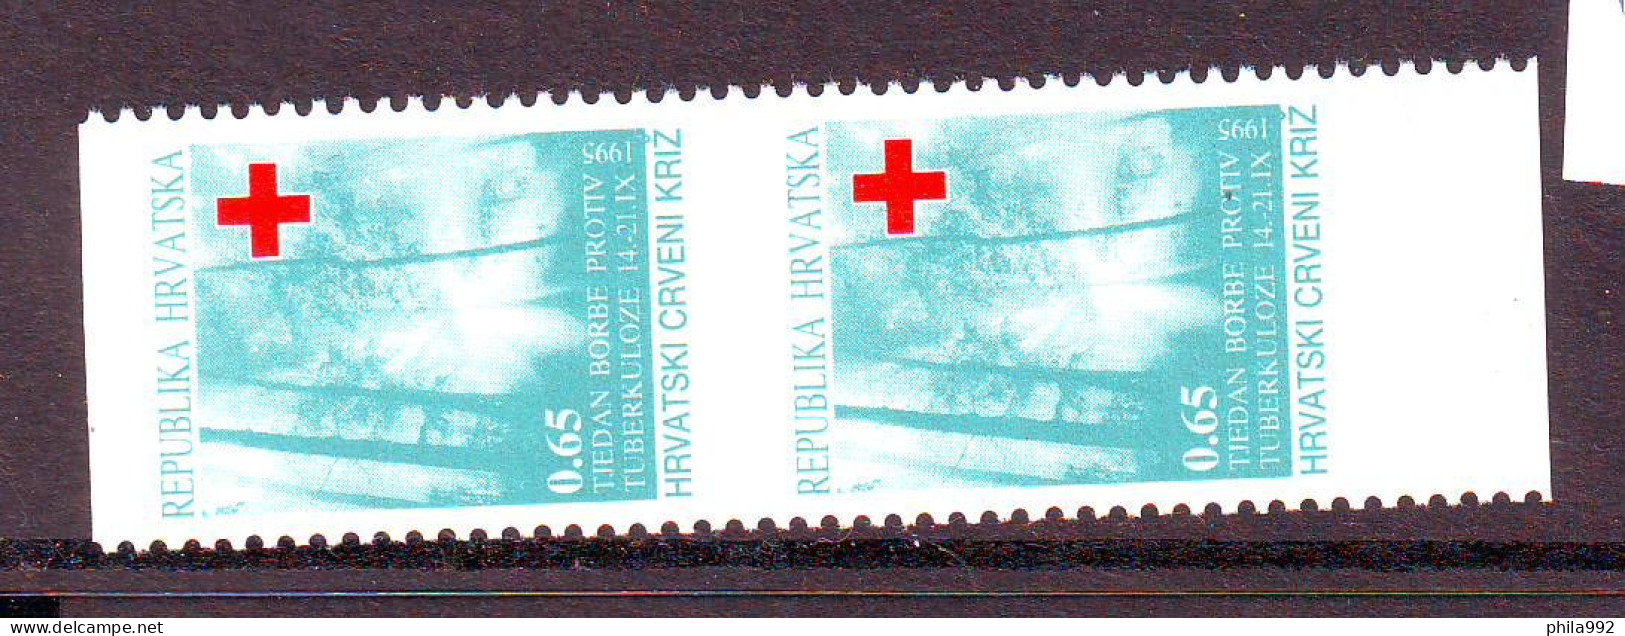 Croatia 1993 Charity Stamp Mi.No.69 RED CROSS TBC A Pair Without Horizontal Serrations MNH - Croatia